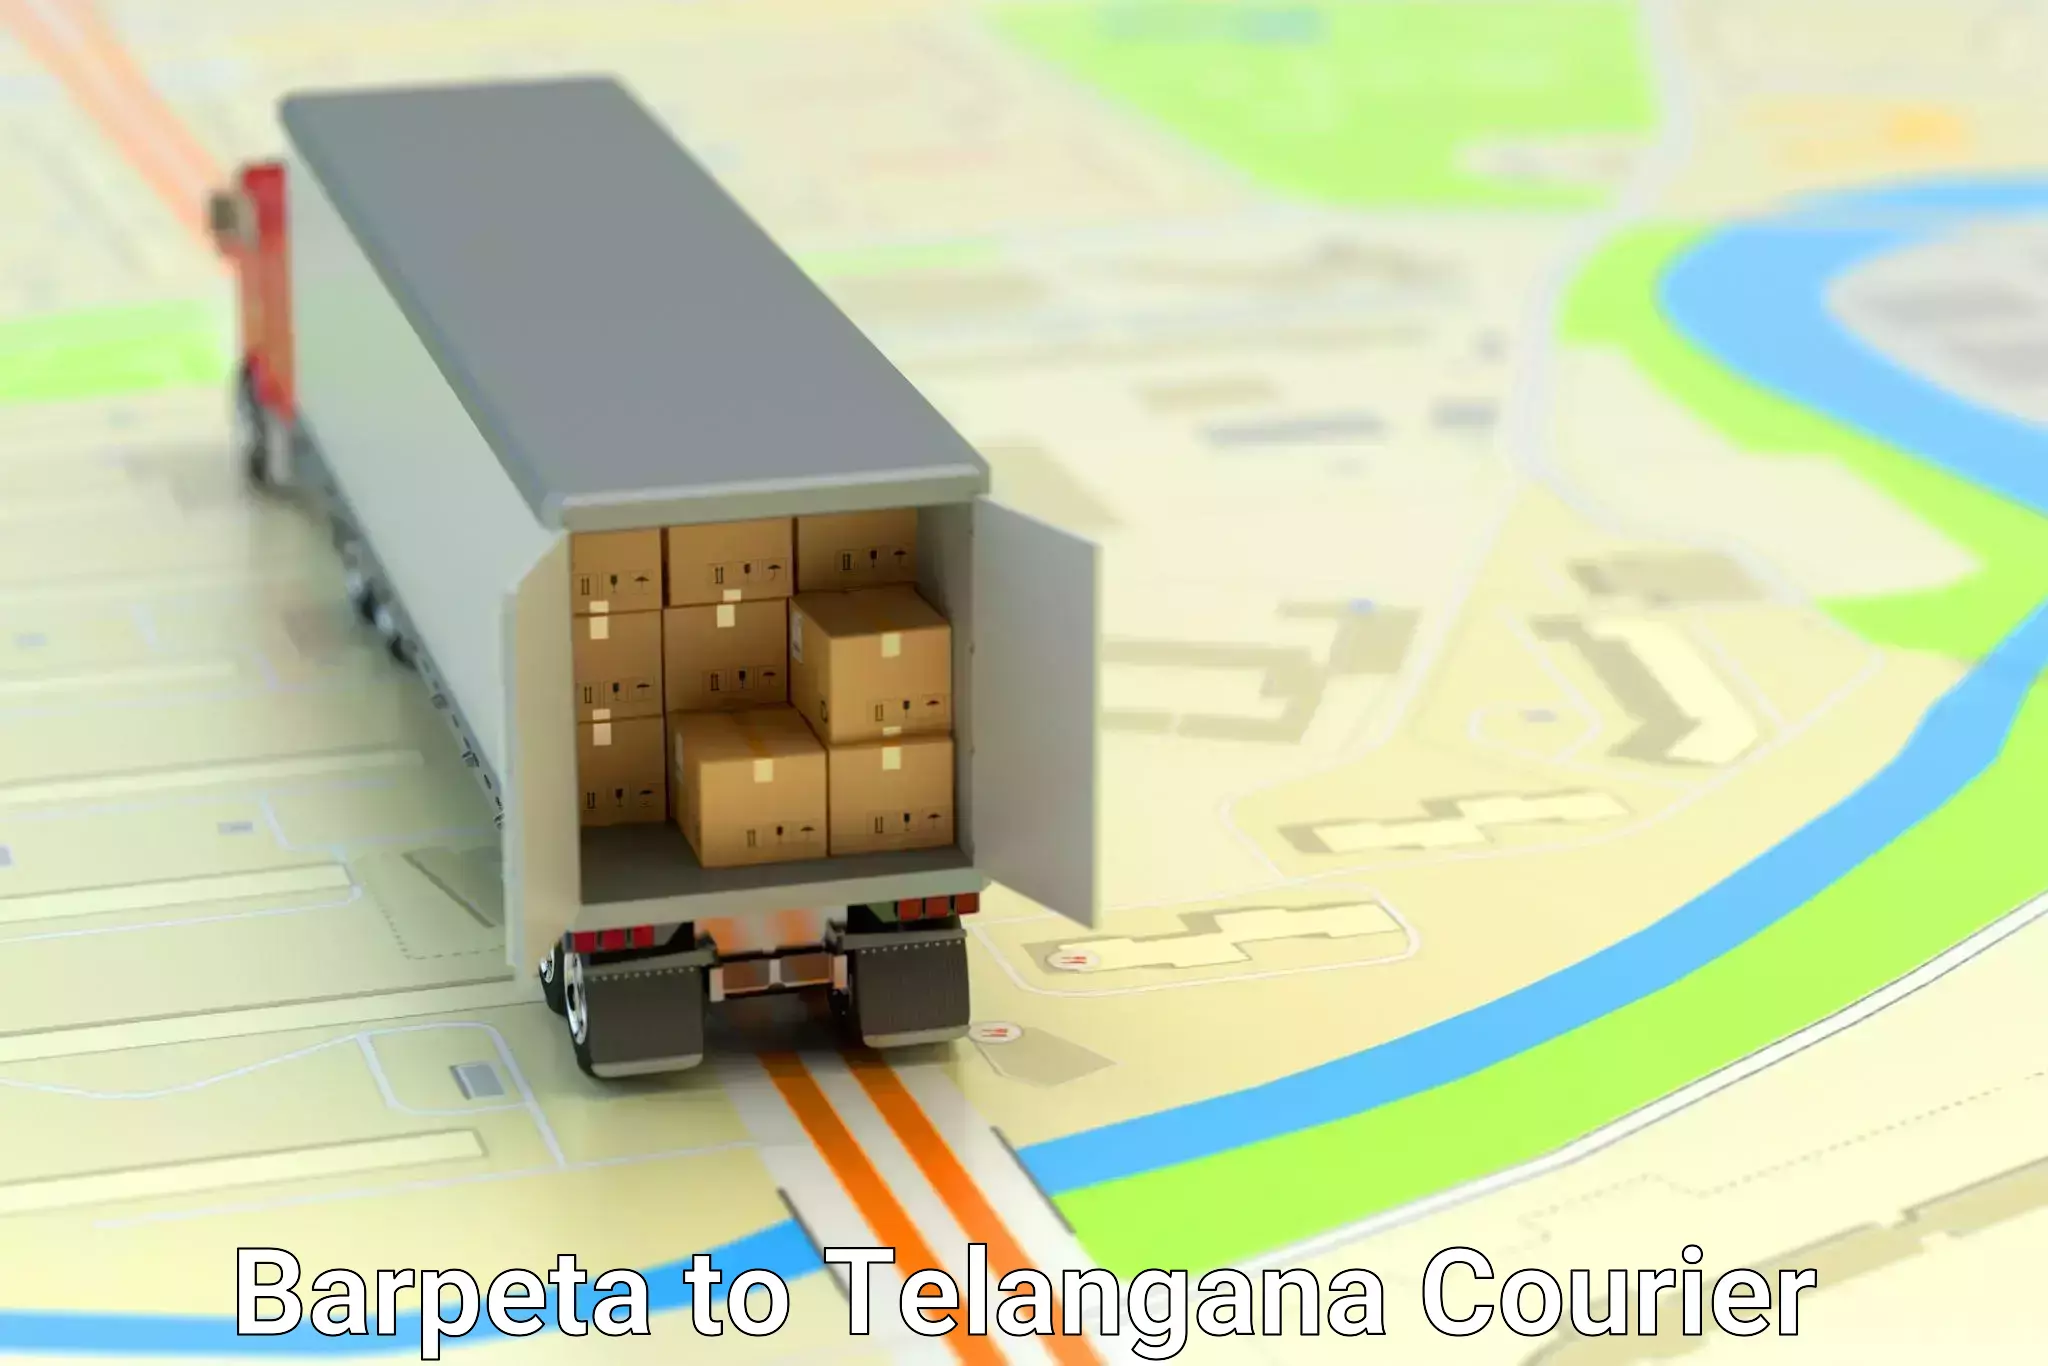 State-of-the-art courier technology Barpeta to Dubbak